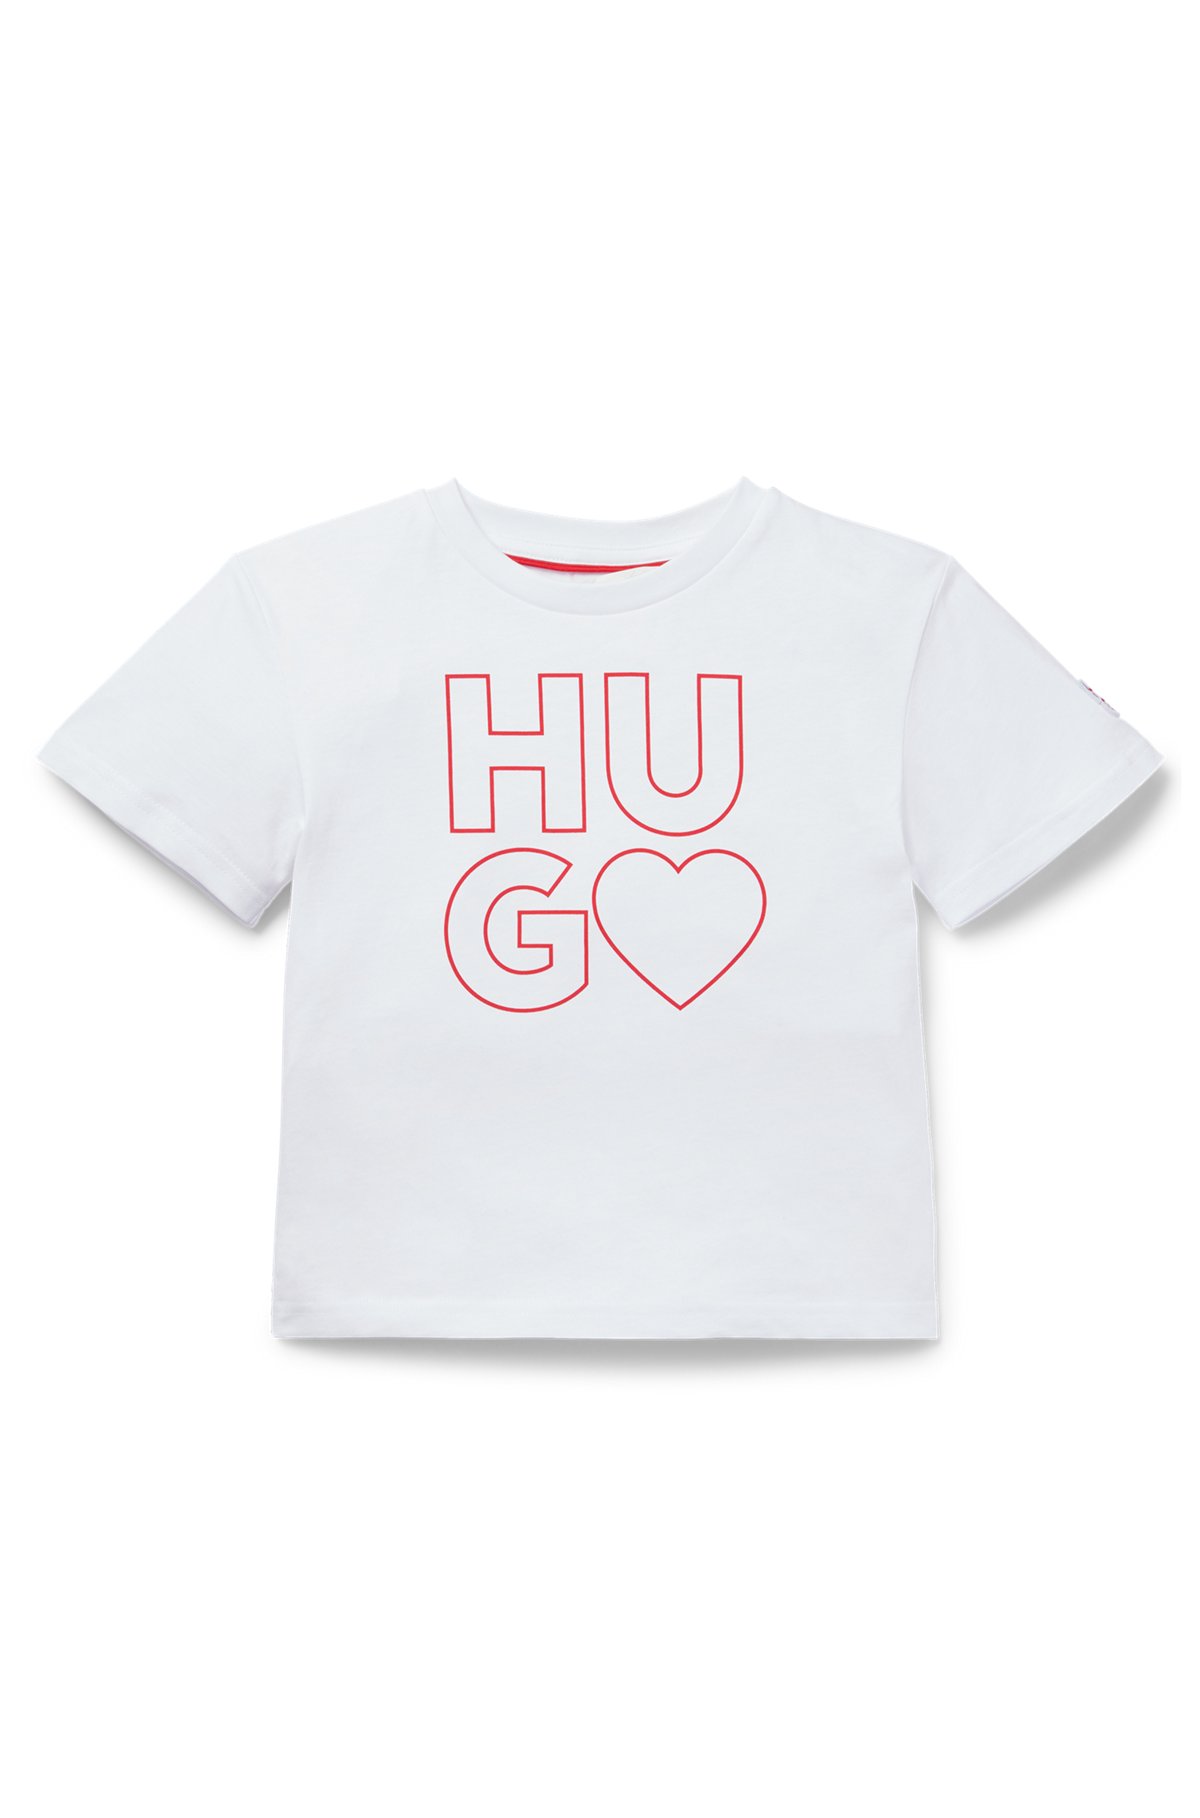 Kids' cotton T-shirt with logo artwork print, White